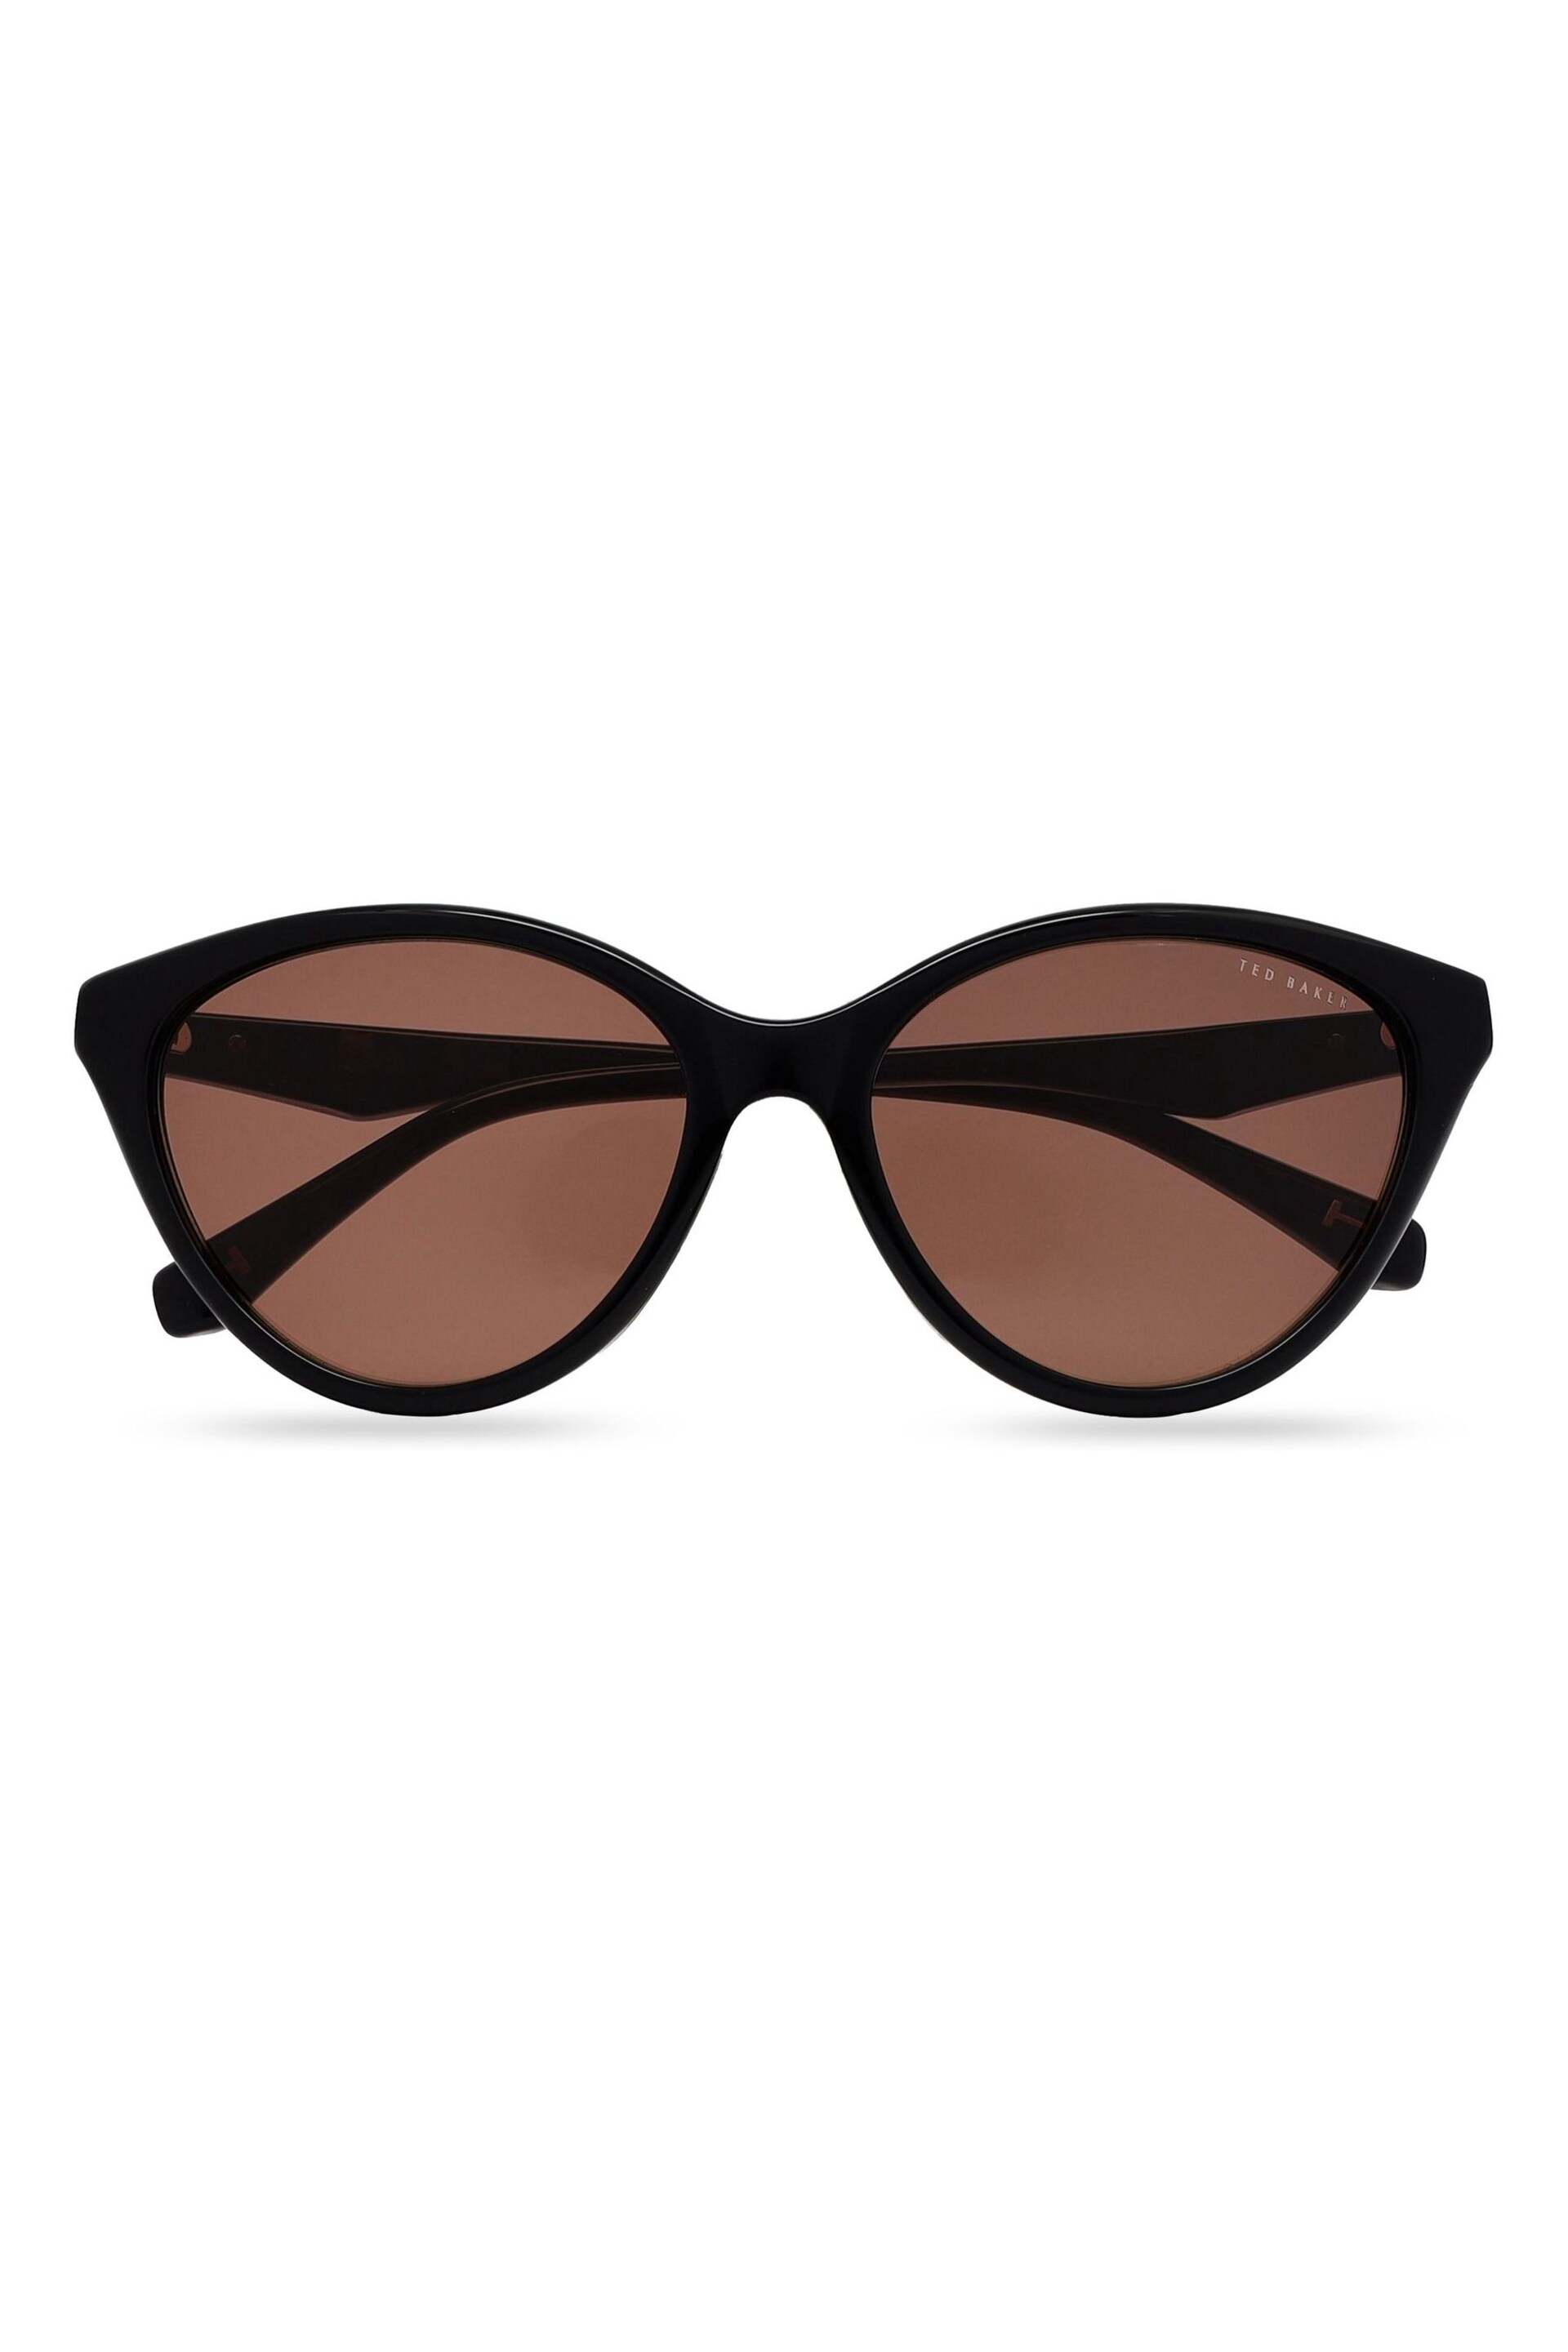 Ted Baker Black Deeha Sunglasses - Image 2 of 5